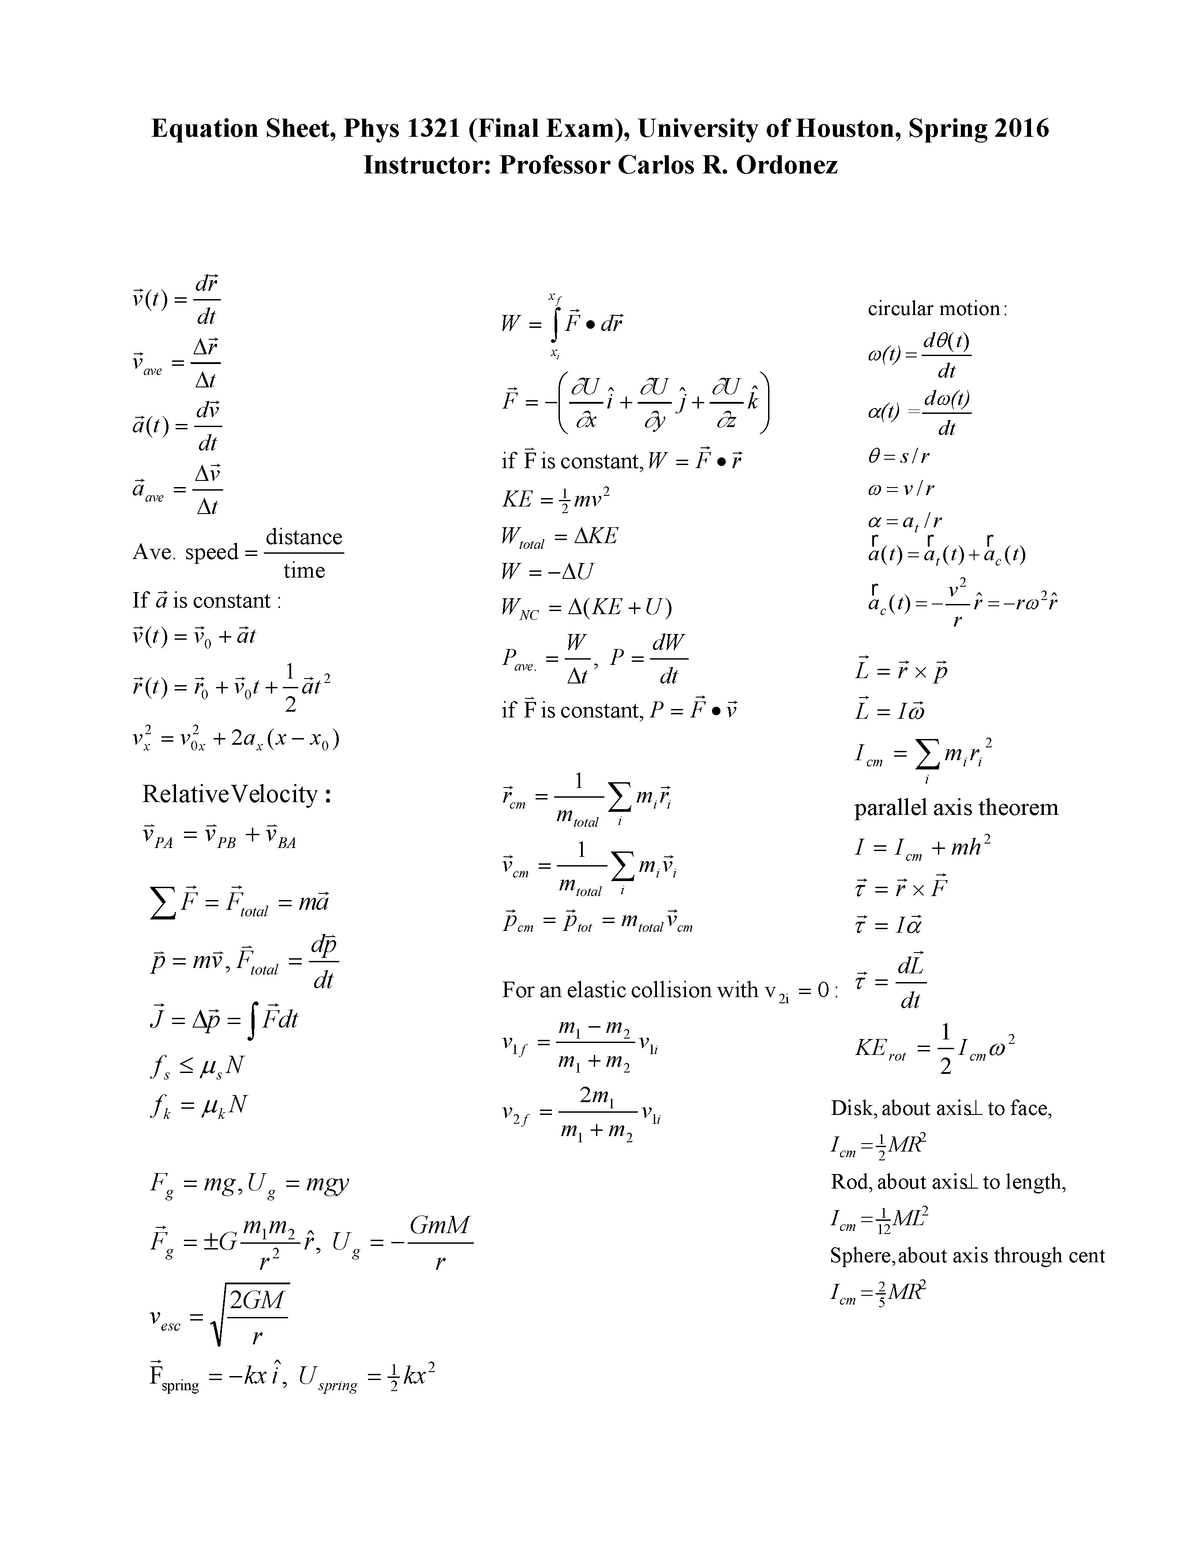 physics 101 formula sheet